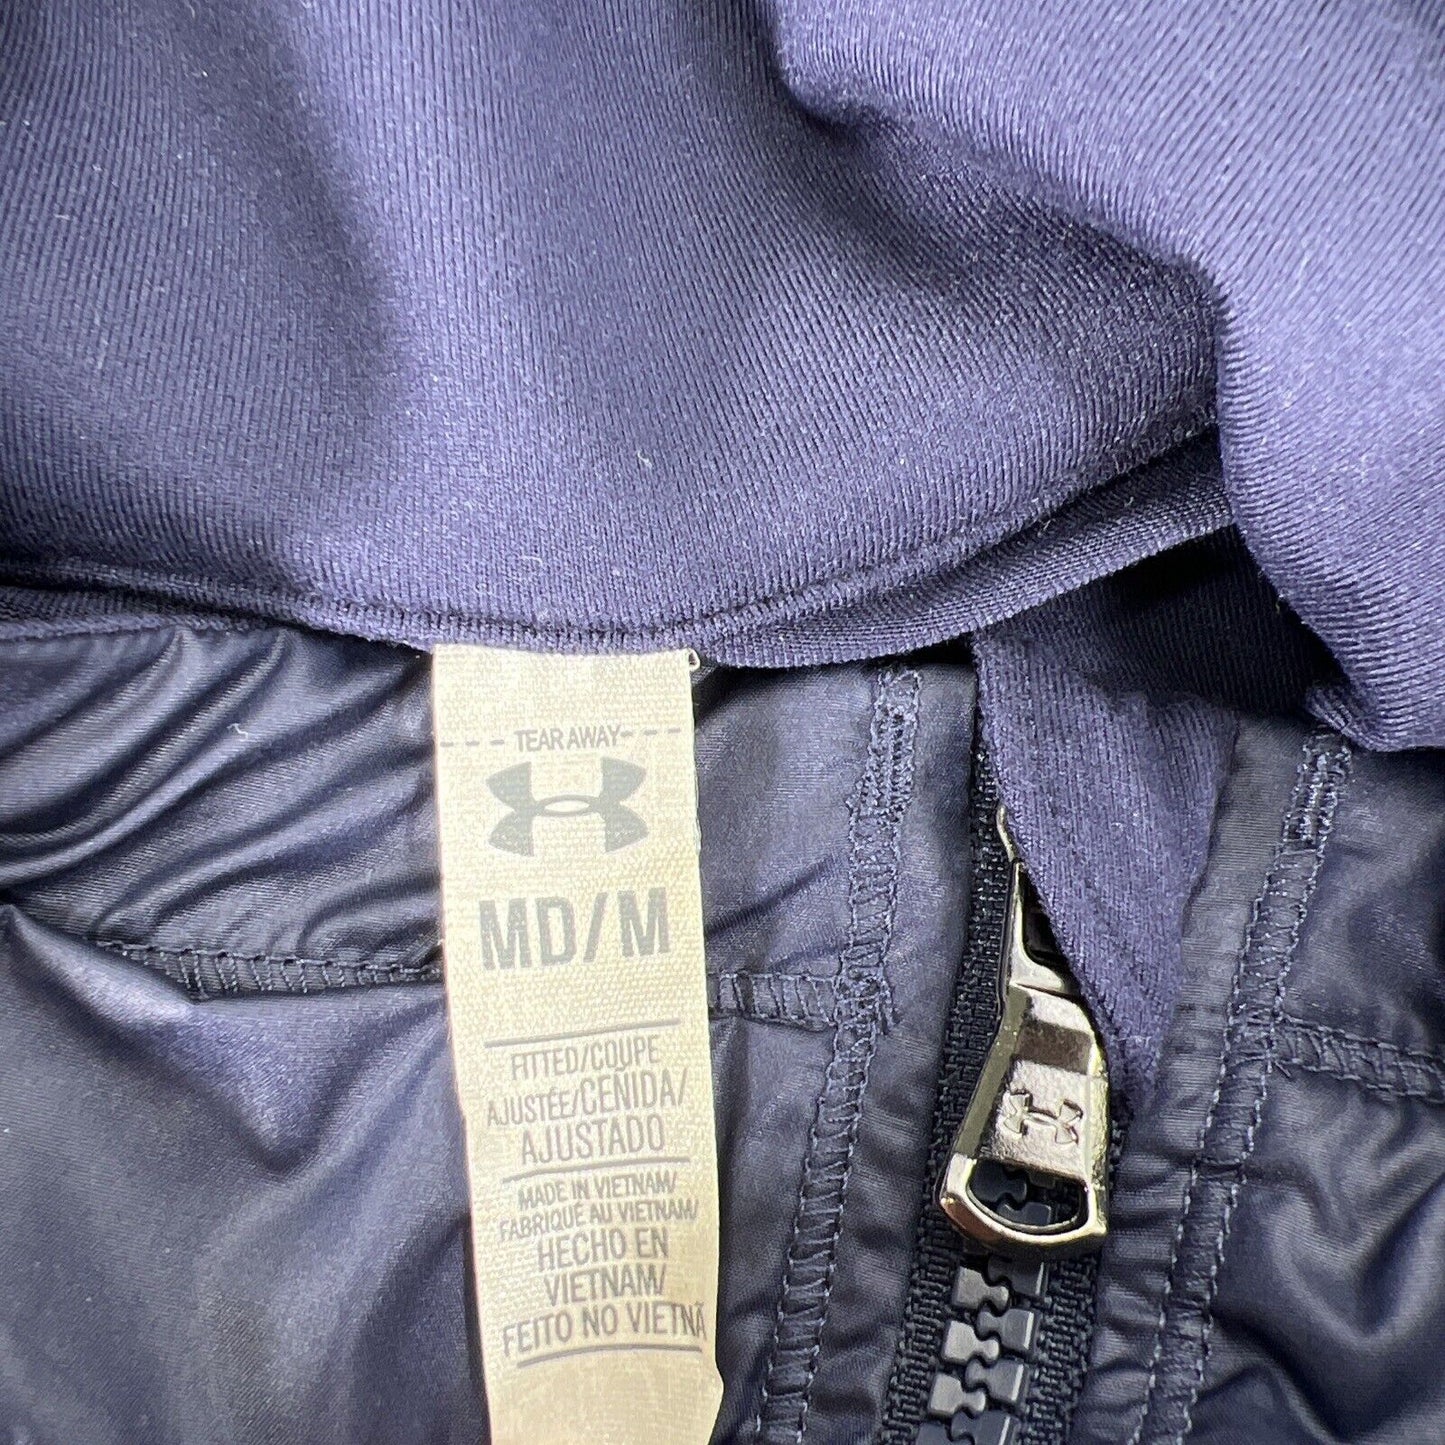 Under Armour Women's Navy Blue Full Zip Warm Up Jacket - M